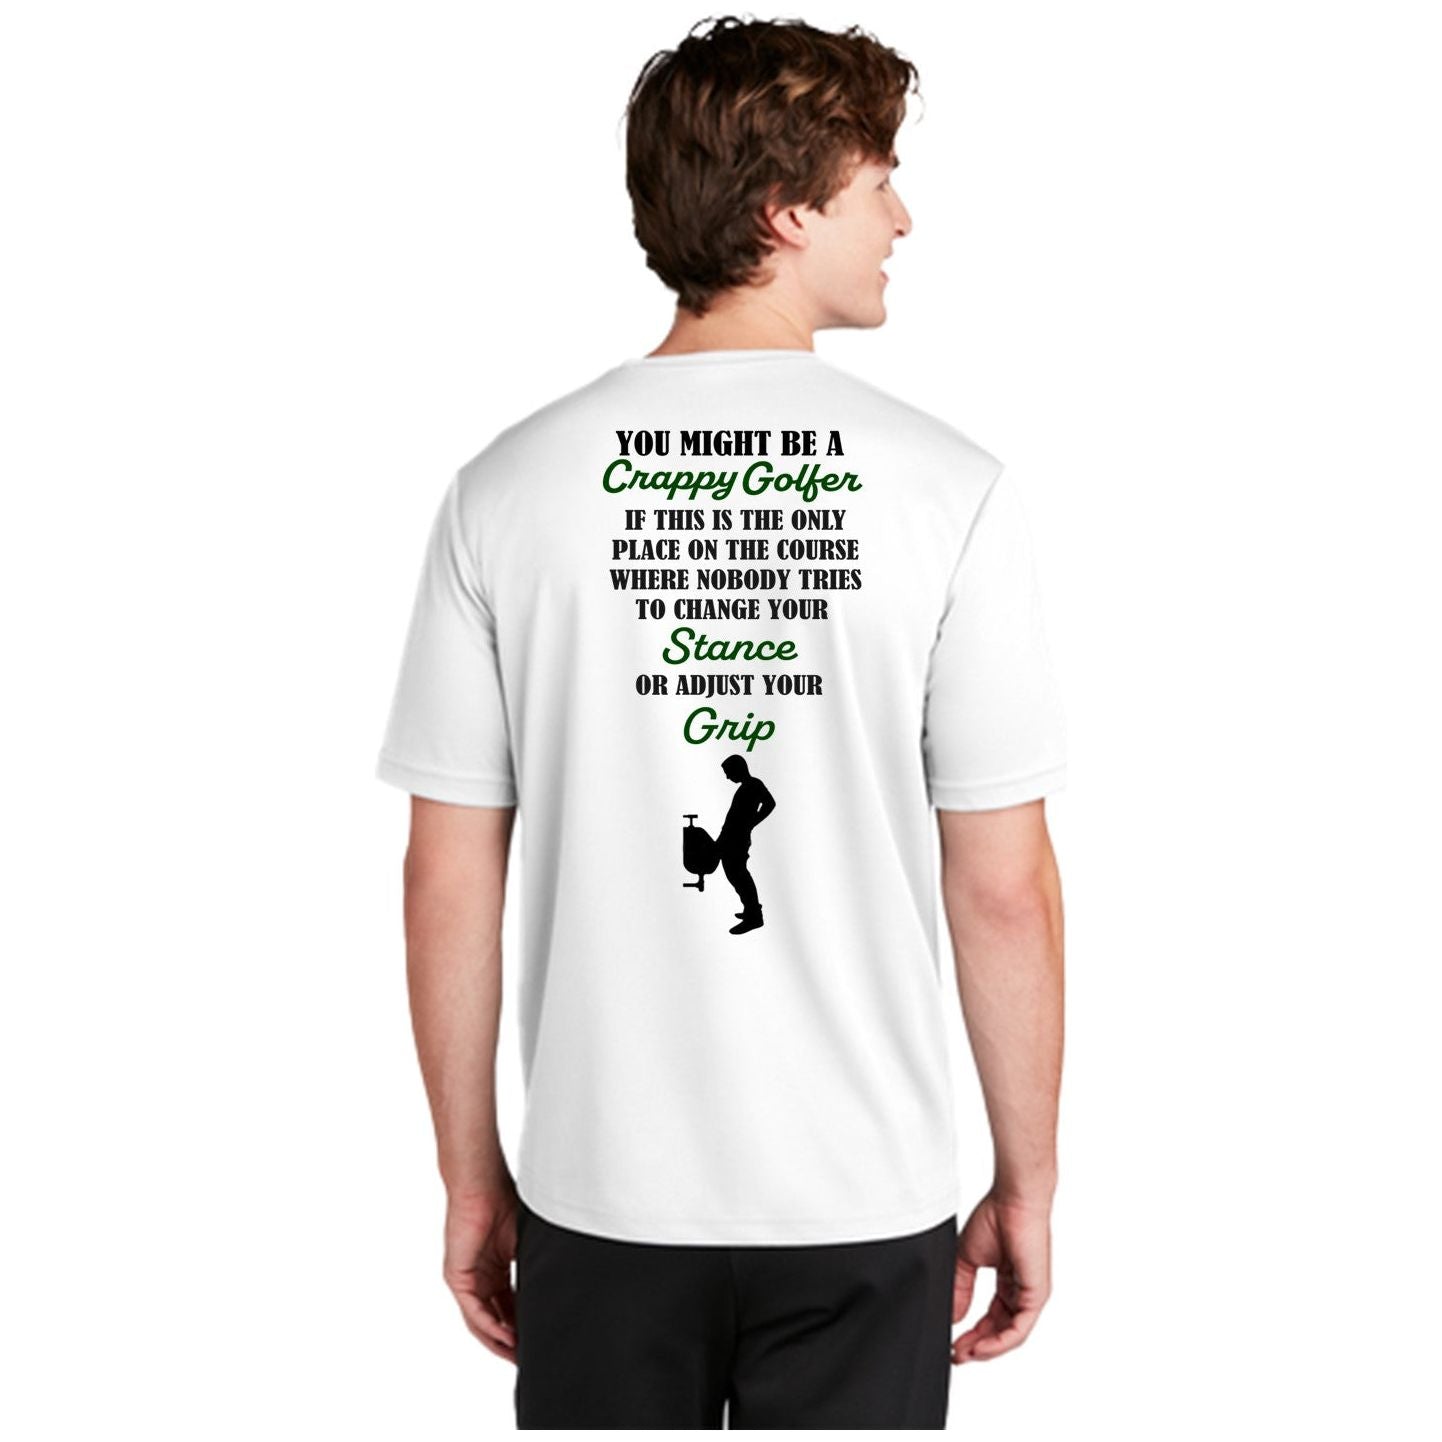 Men's Golf Shirts